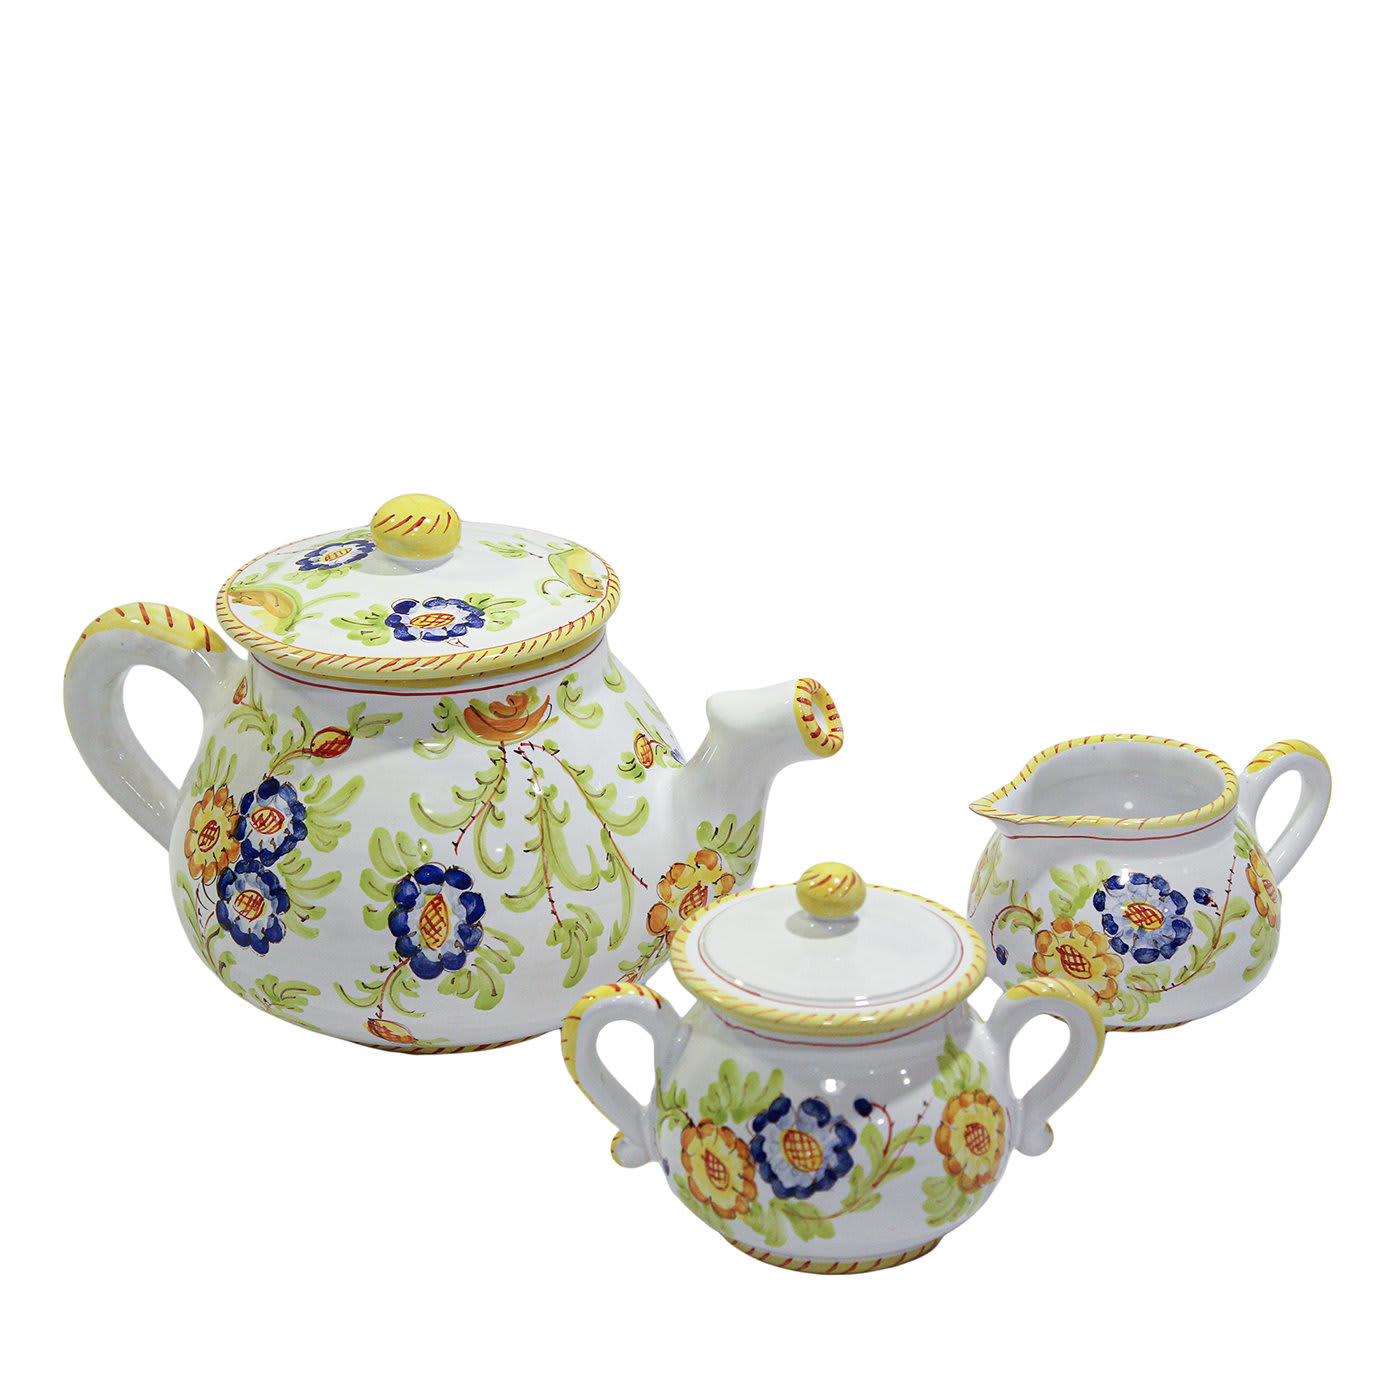 Tuscia Set of Teapot, Sugar Bowl and Milk Jug by Lorenza Adami - Sbigoli Terrecotte Firenze